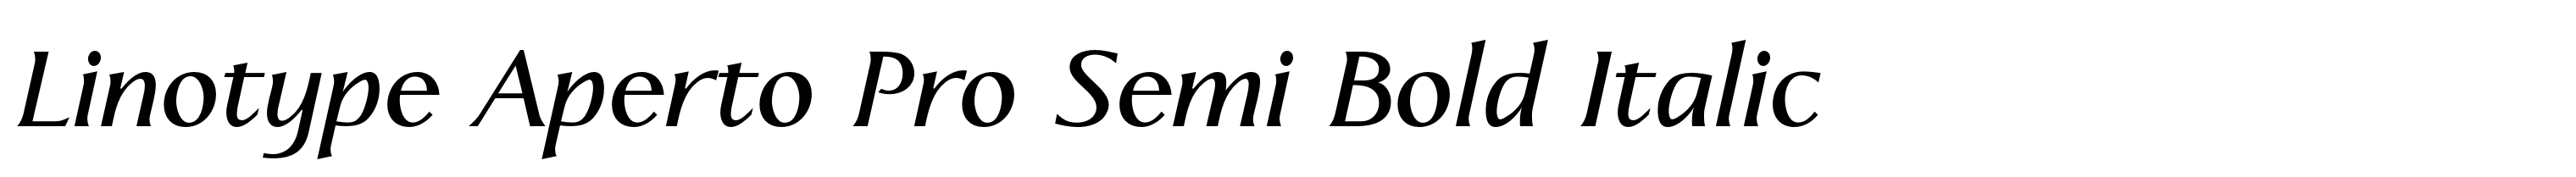 Linotype Aperto Pro Semi Bold Italic